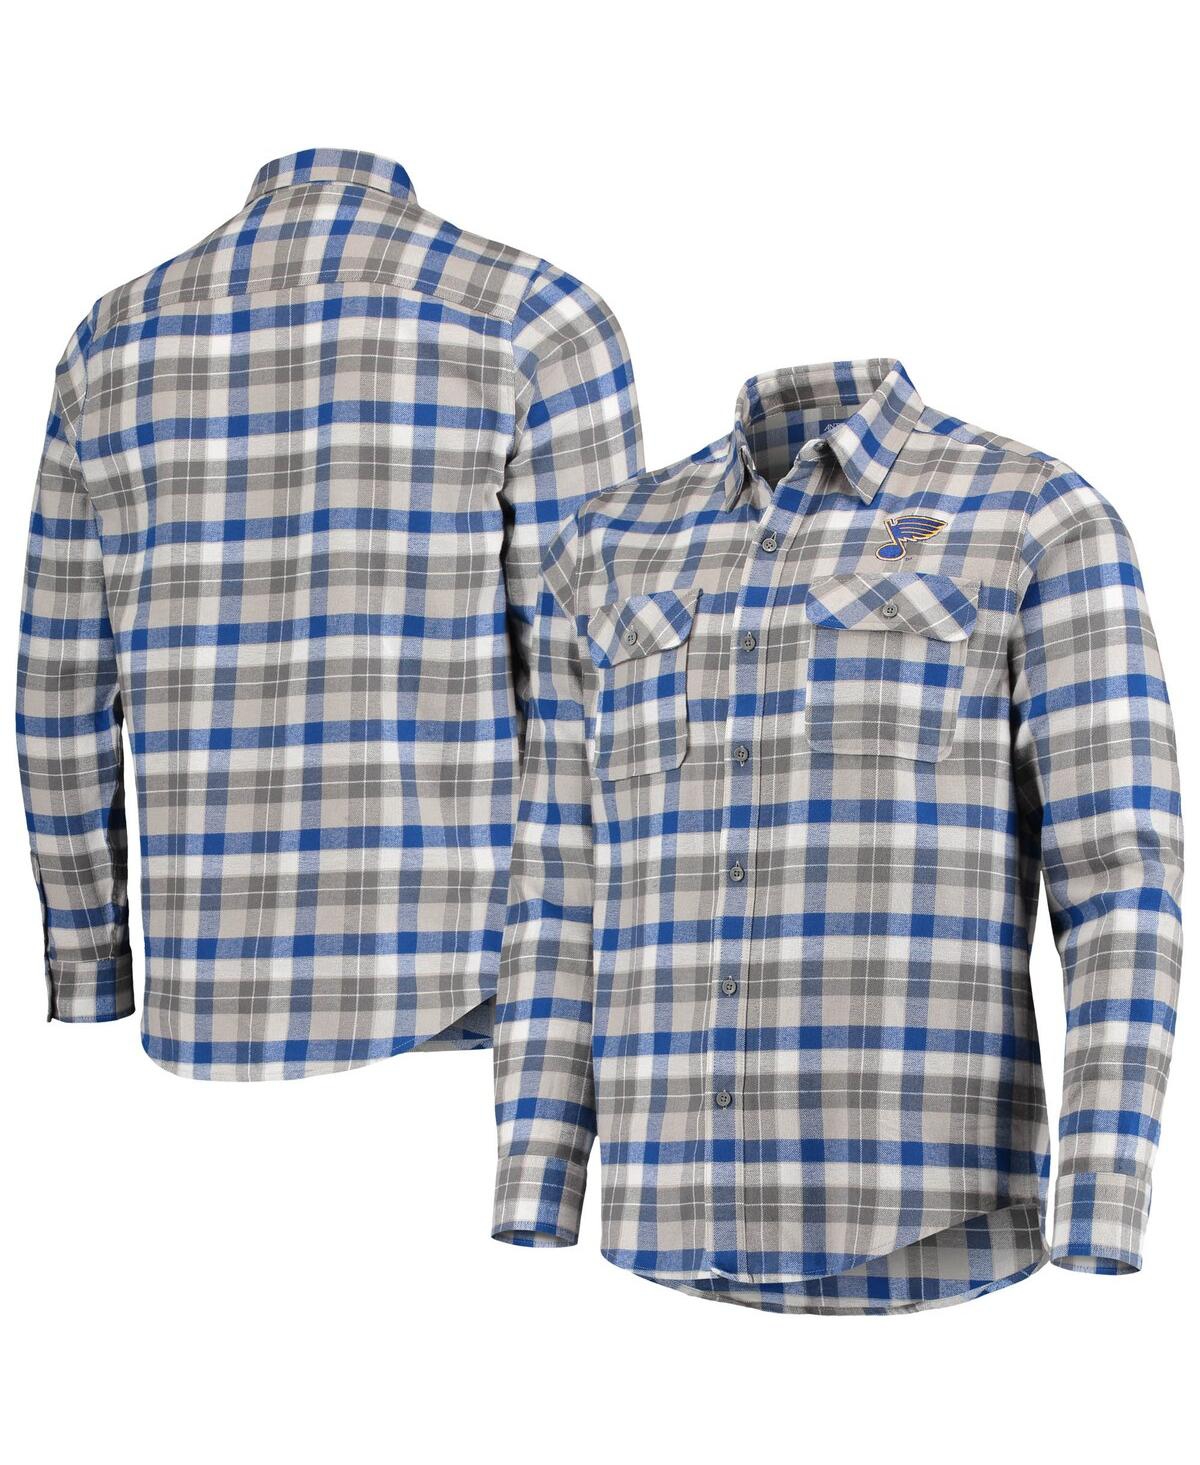 Men's Antigua Blue, Gray St. Louis Blues Ease Plaid Button-Up Long Sleeve Shirt - Blue, Gray